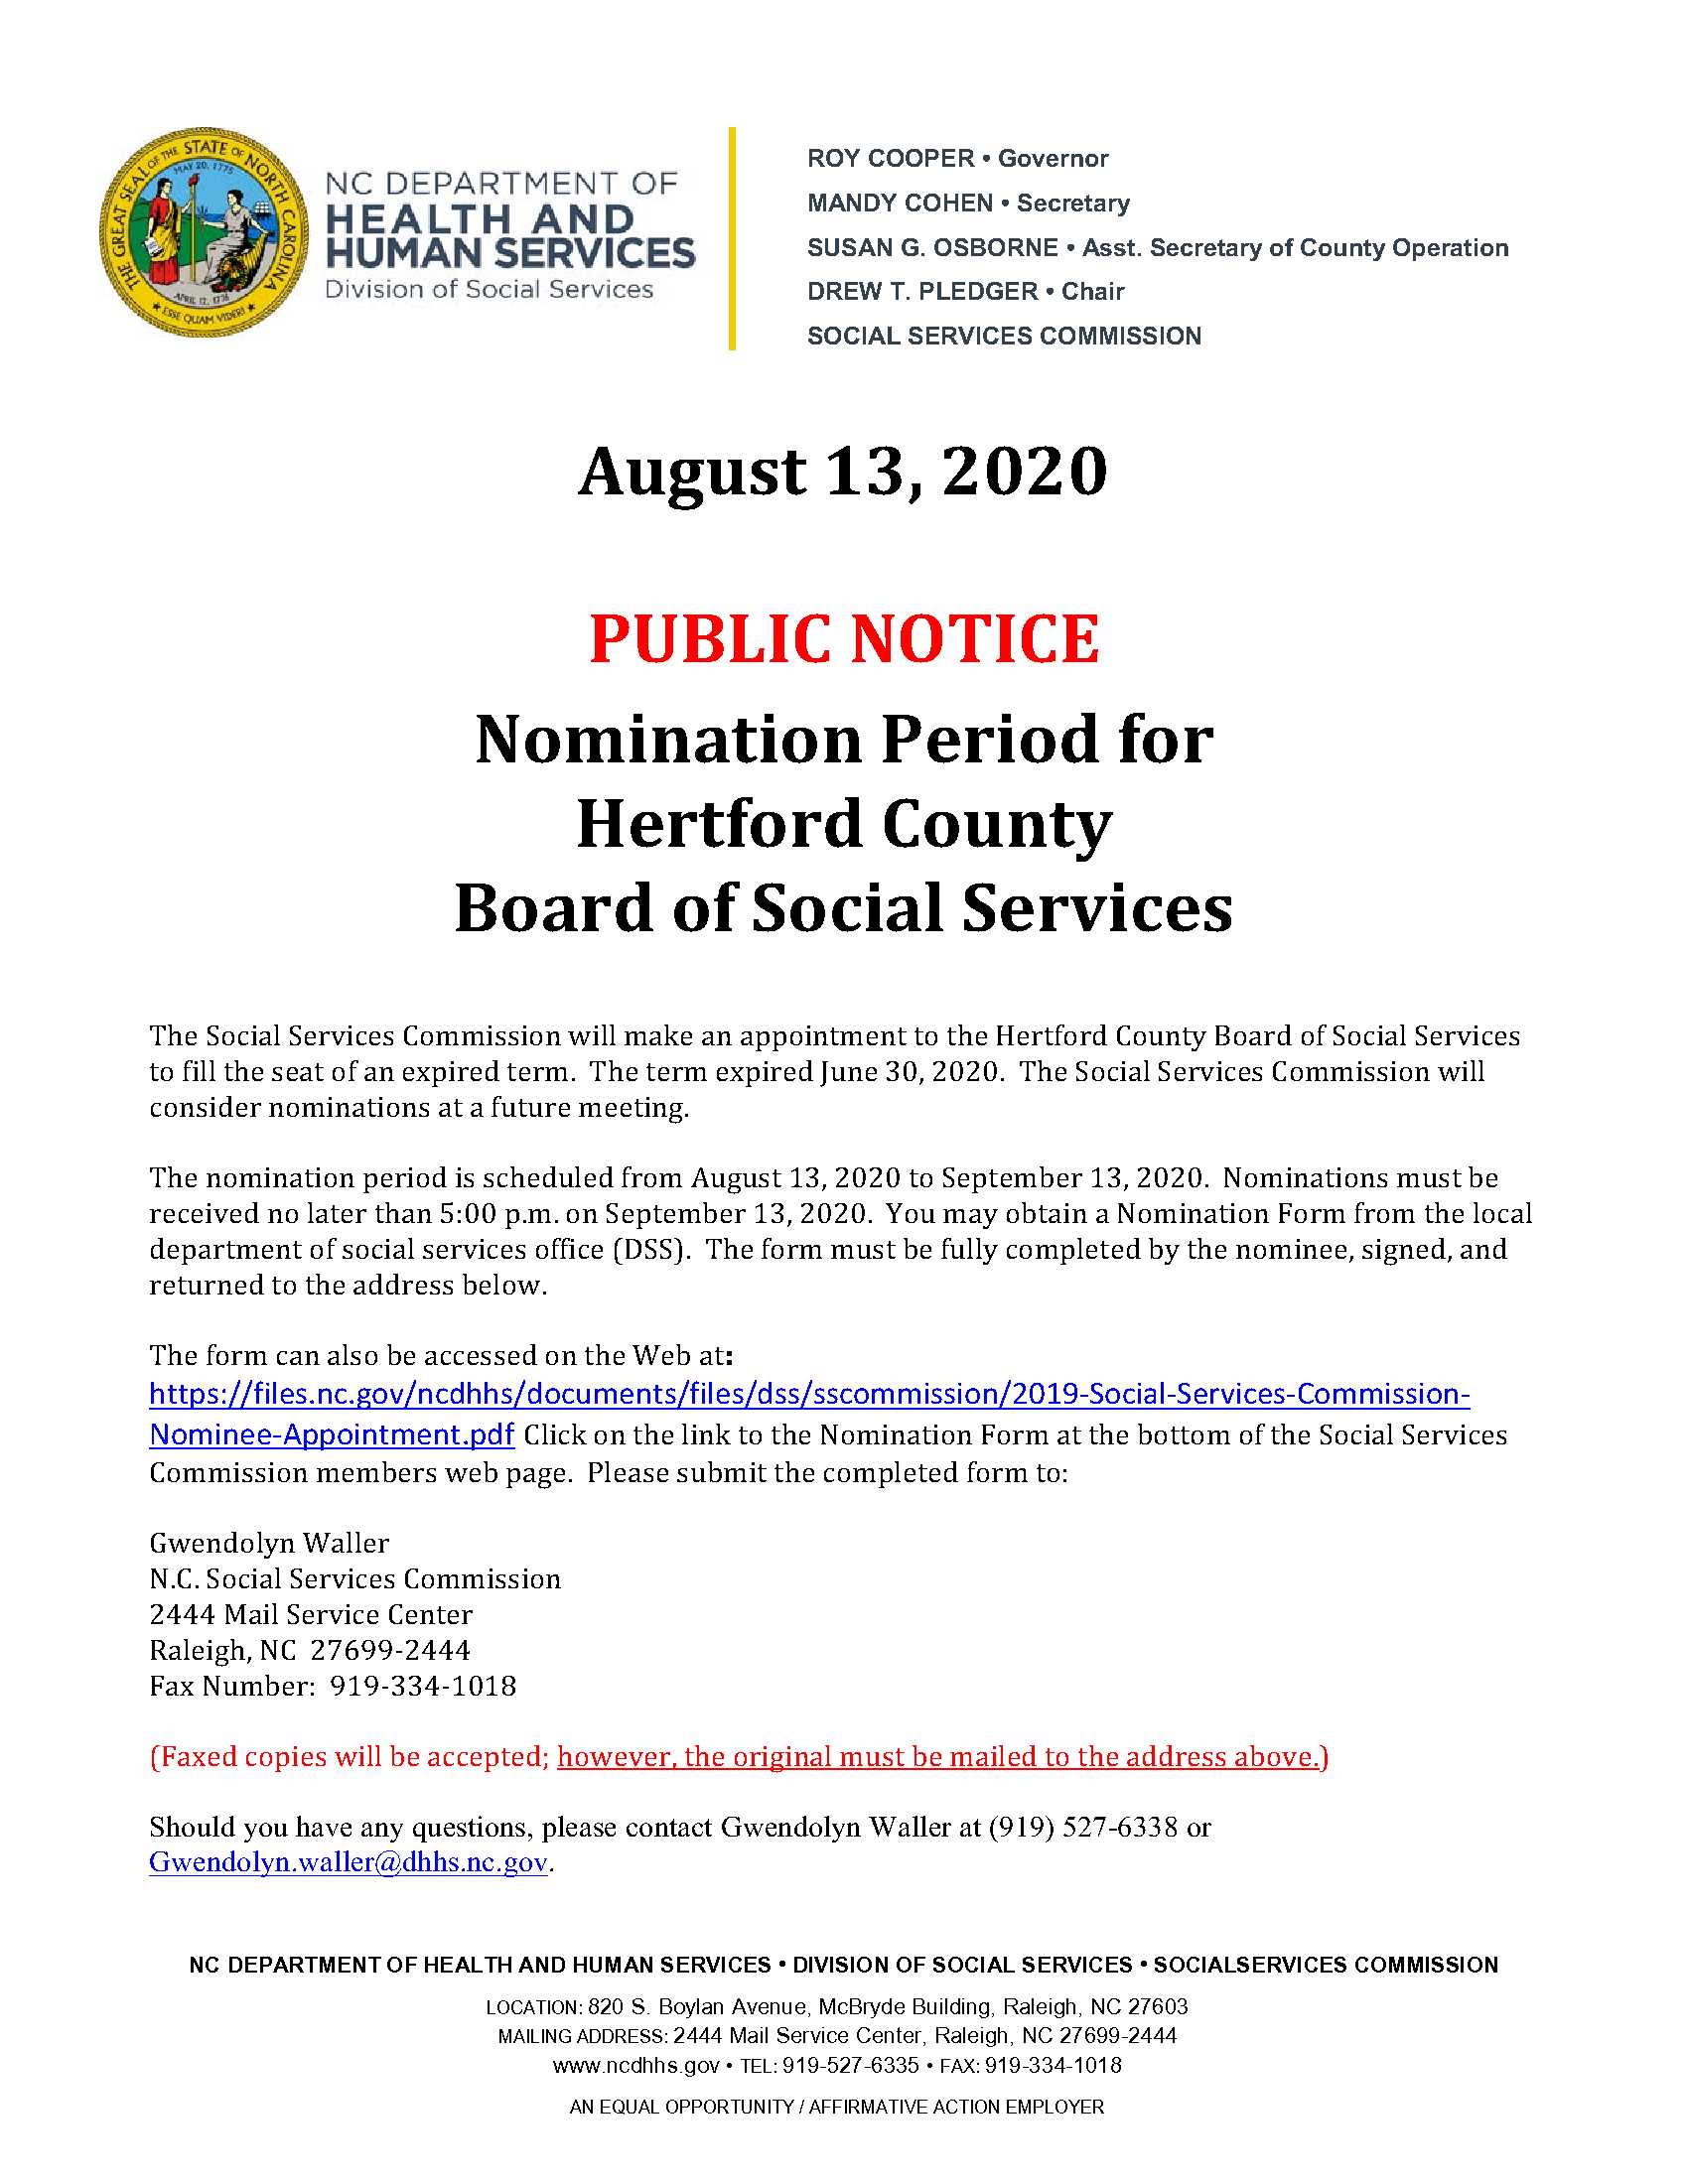 Hertford County Vacancy August_HCBSS